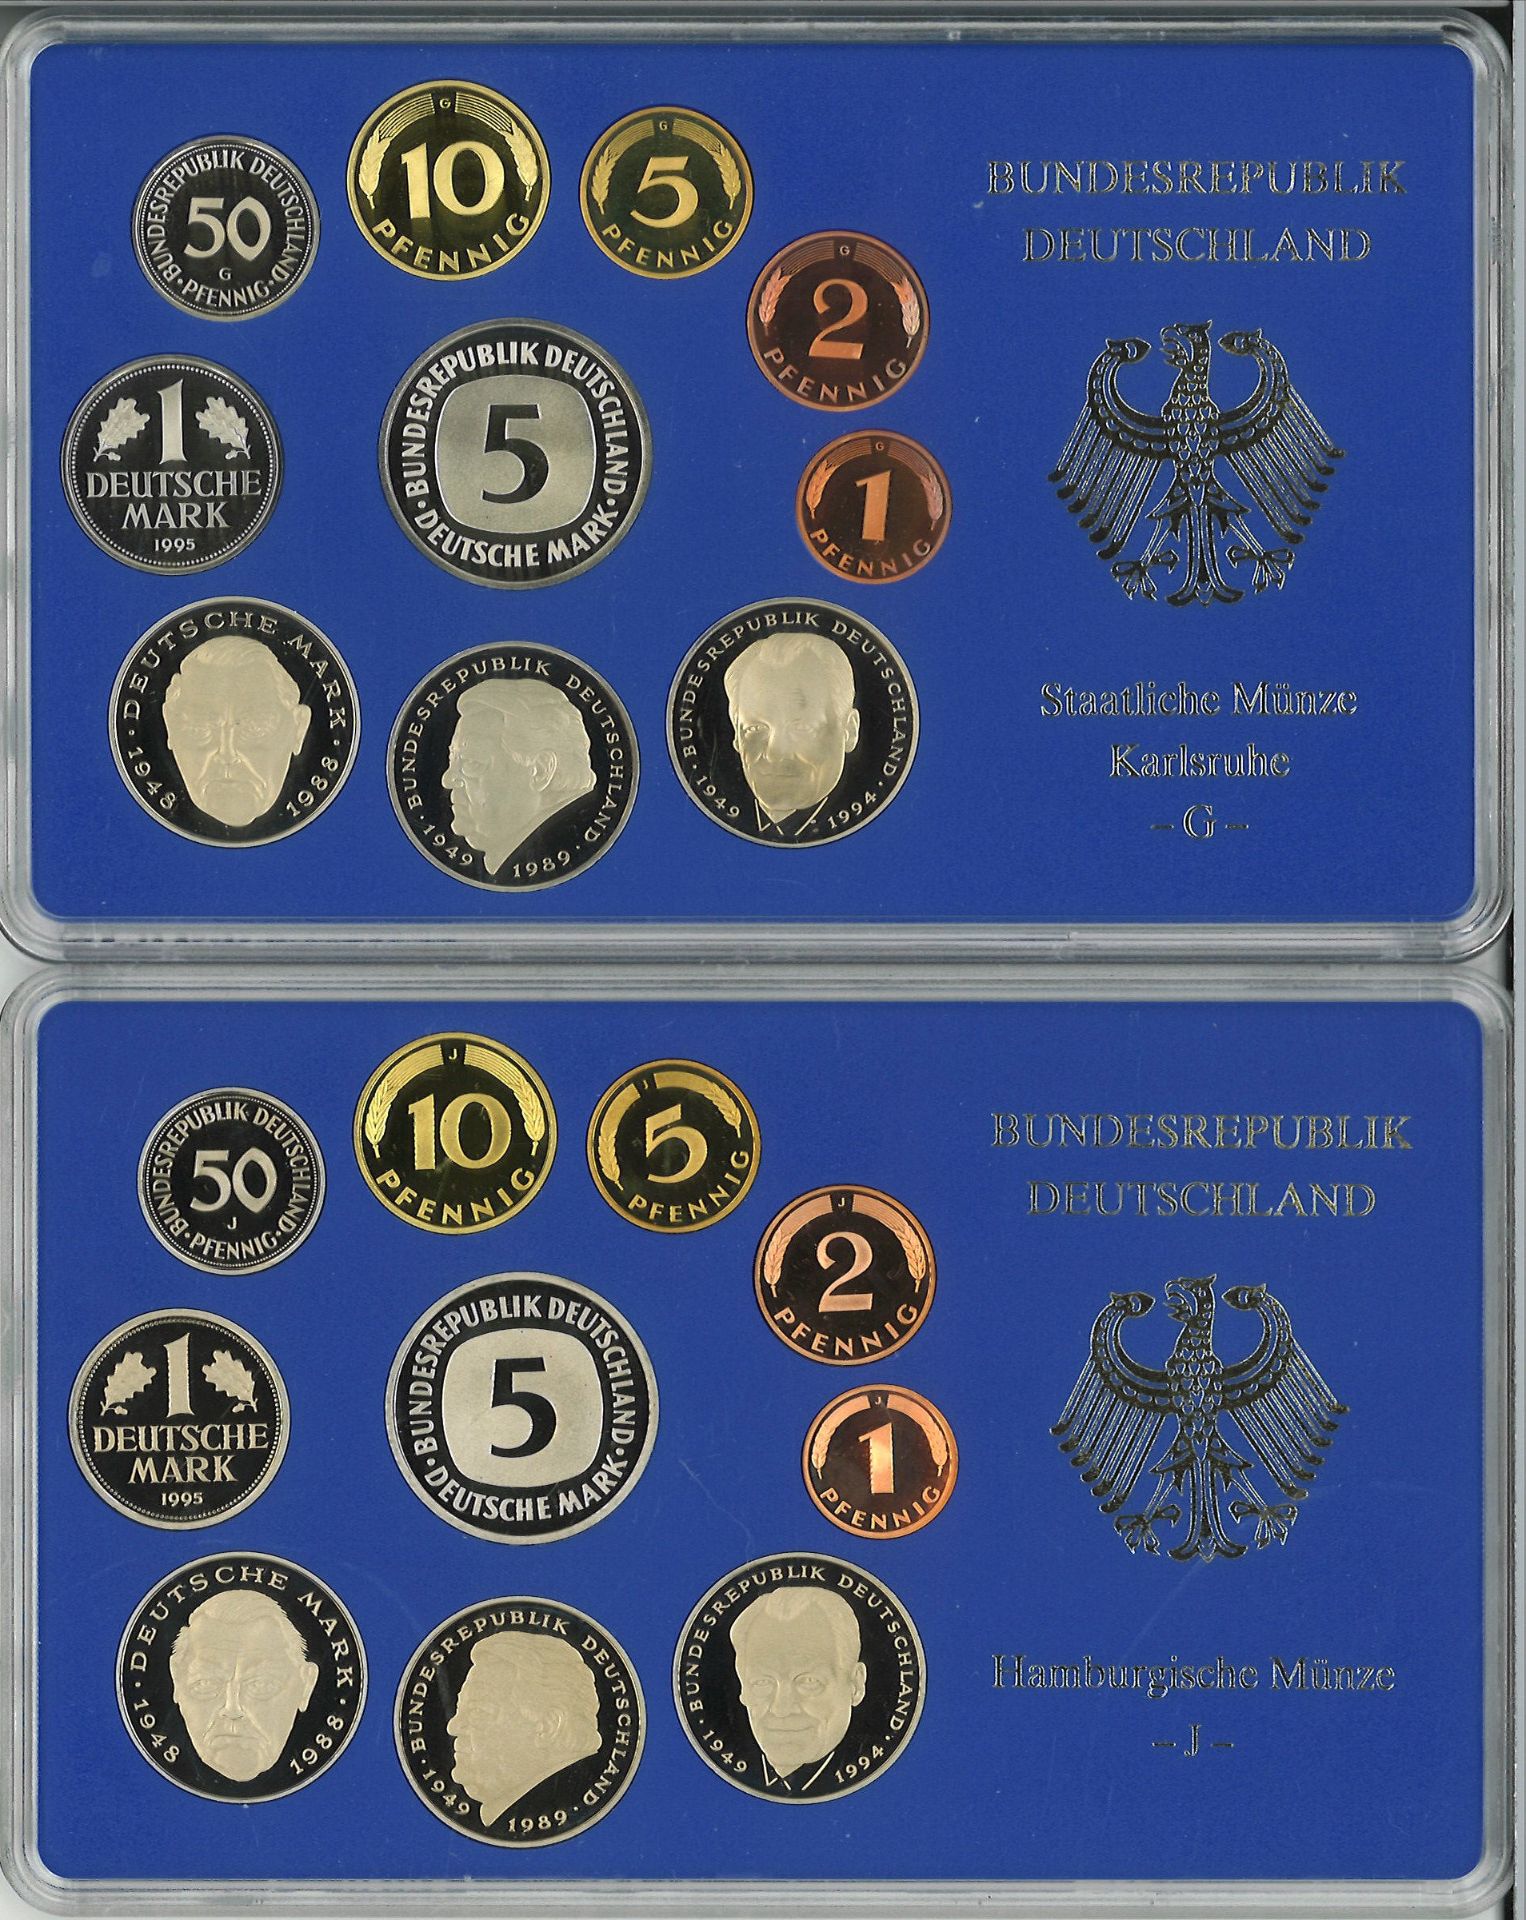 BRD Münzsets Jahrgang 1995, A, D, F, G und J. Im Original Blister. - Image 4 of 6